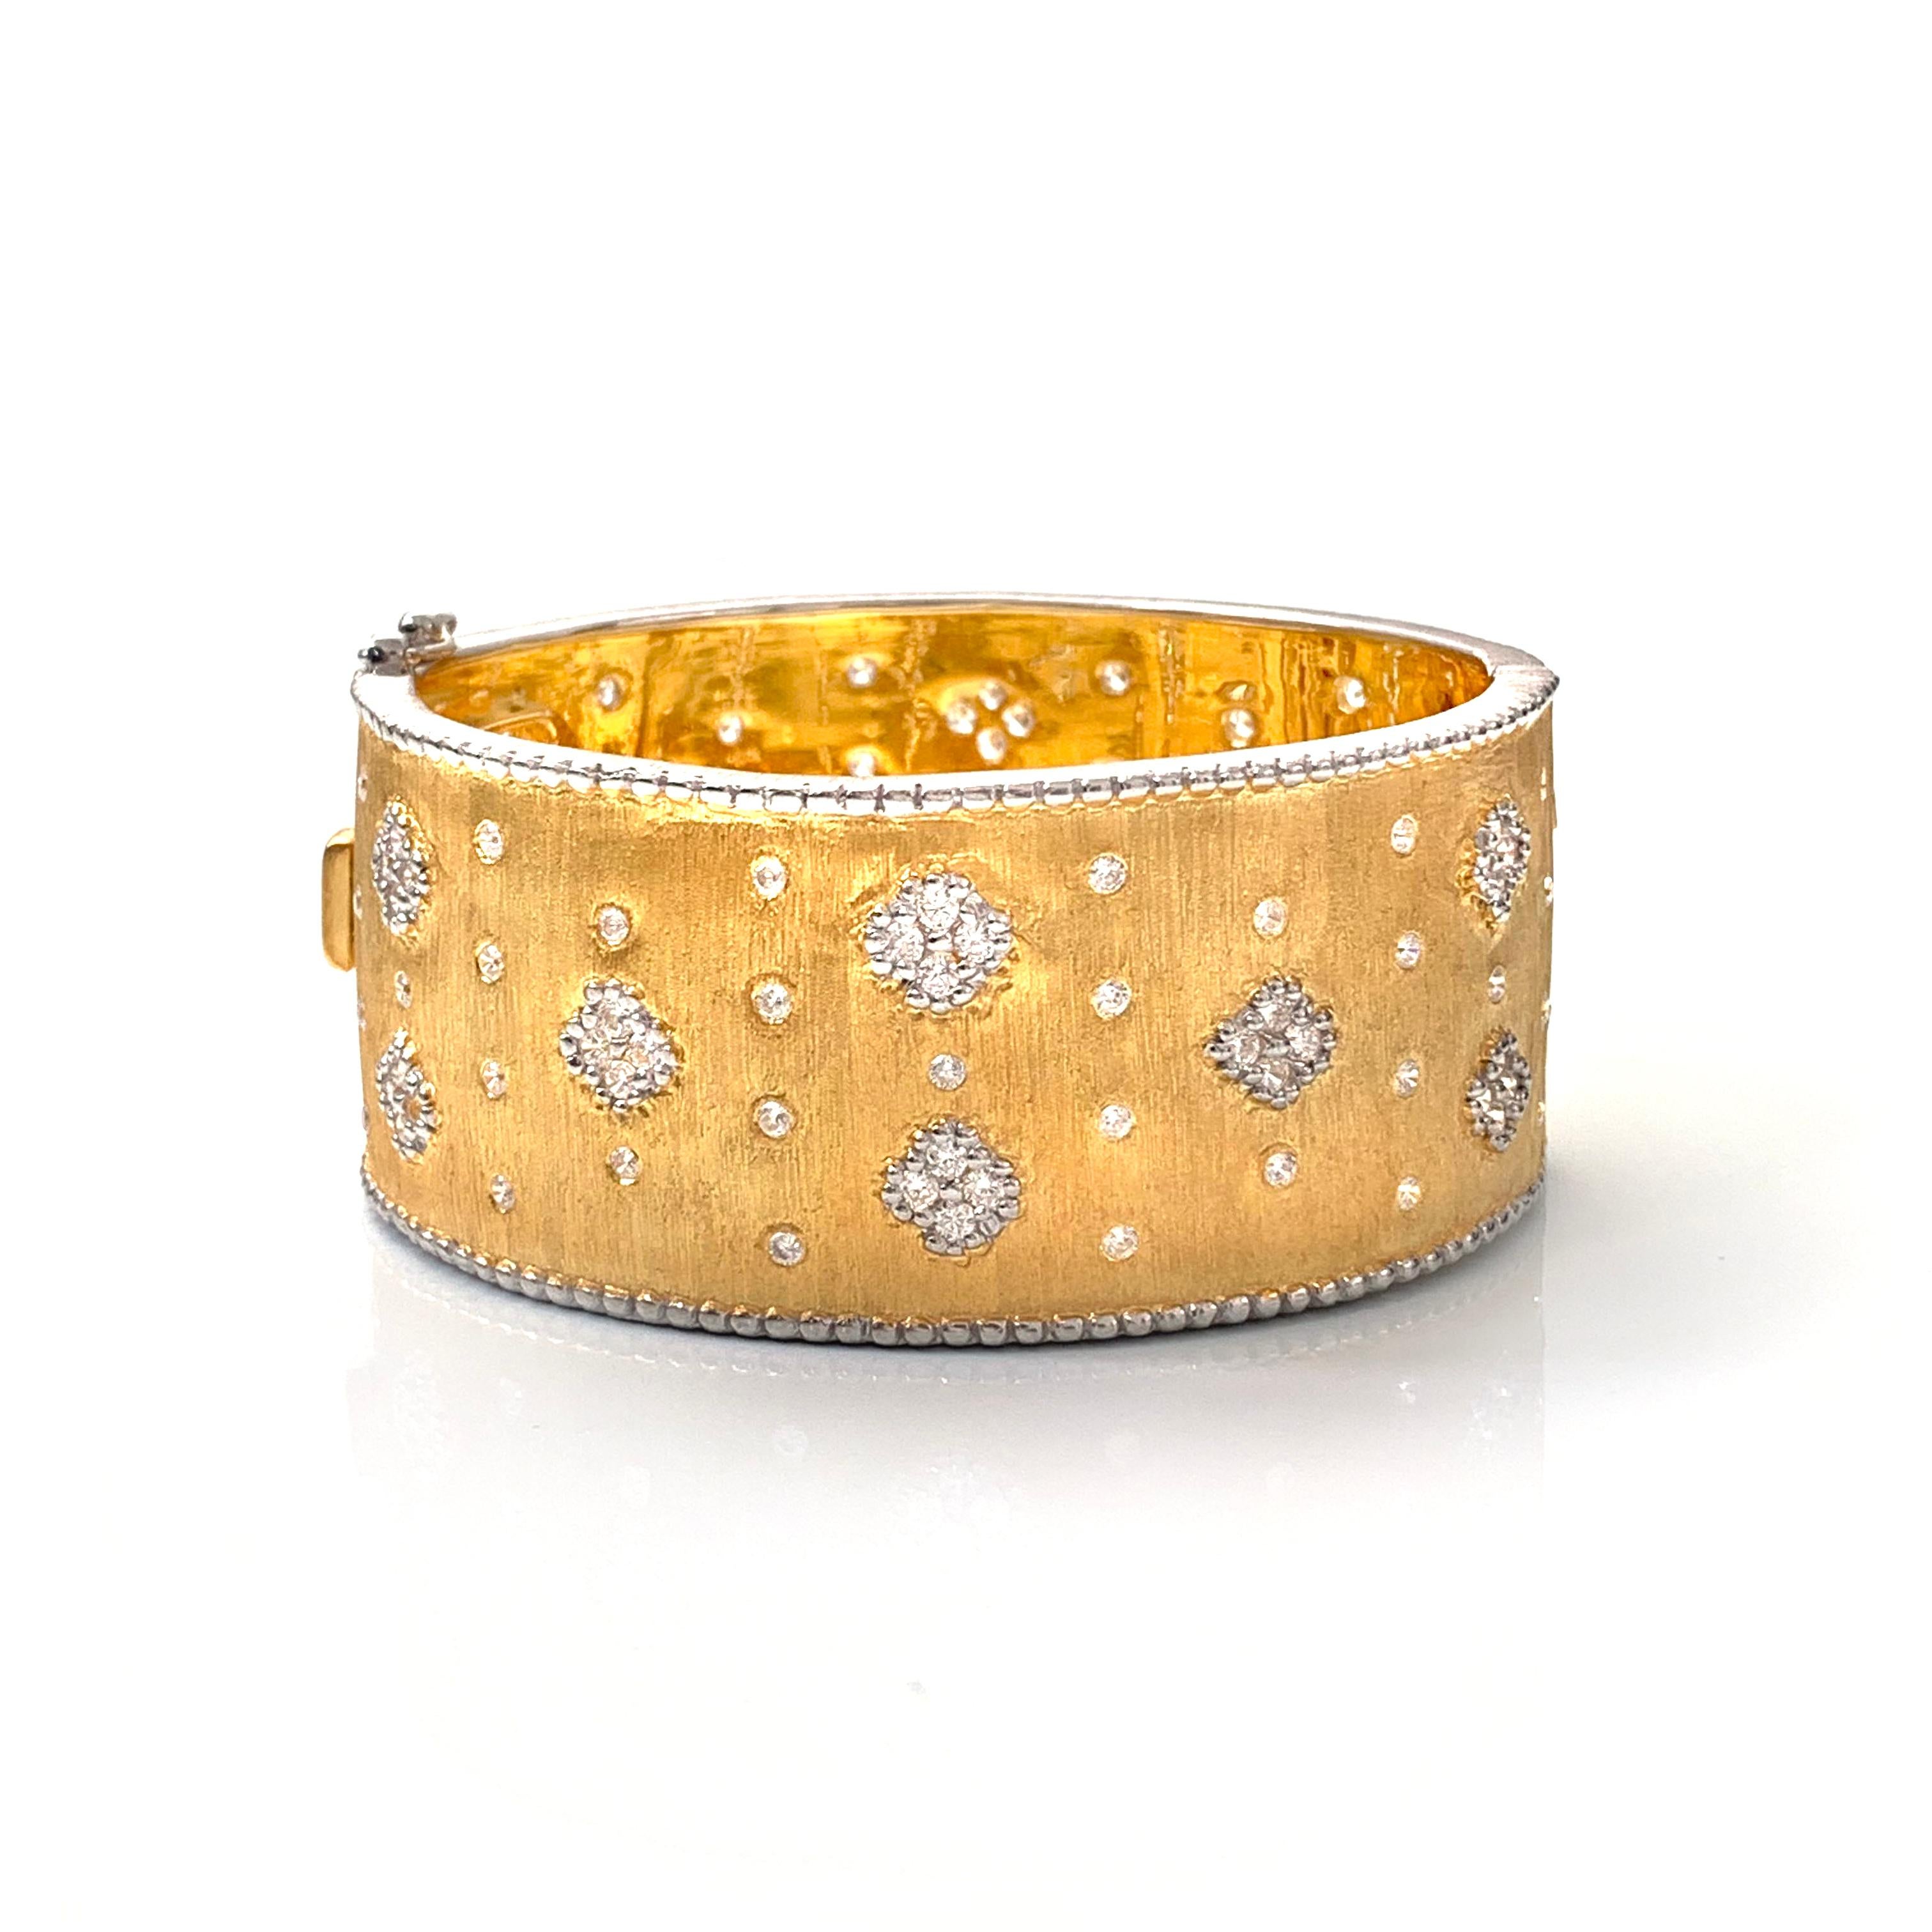 Bijoux Num fabulous clover pattern wide vermeil bangle bracelet. This beautiful bracelet features 126 pcs of round simulated diamonds, handcrafted Italian 